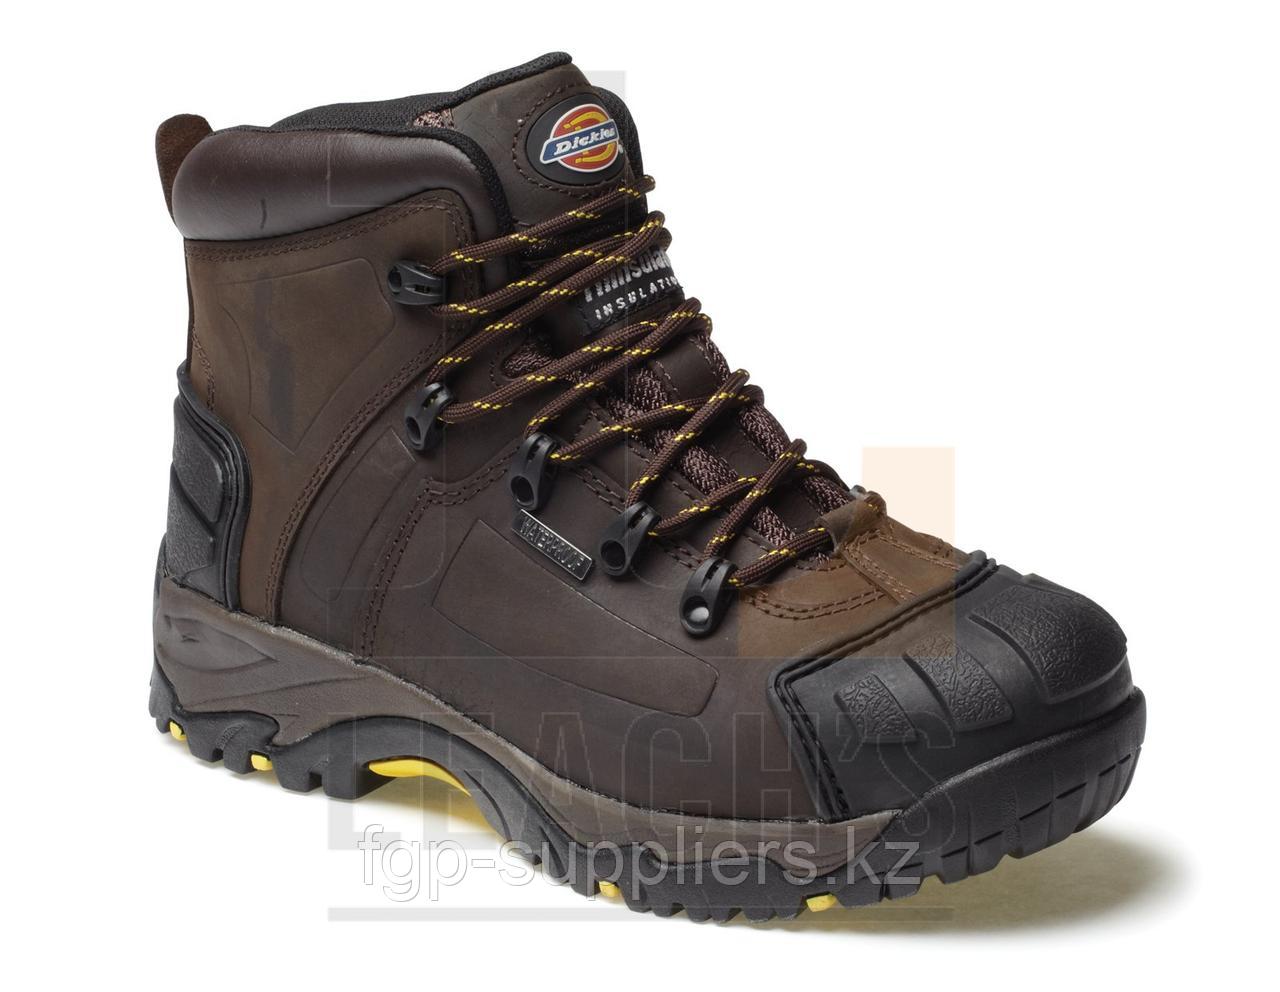 Medway Super Safety Waterproof Boot - Brown / Medway Super Водонепроницаемые защитные ботинки - Коричневые